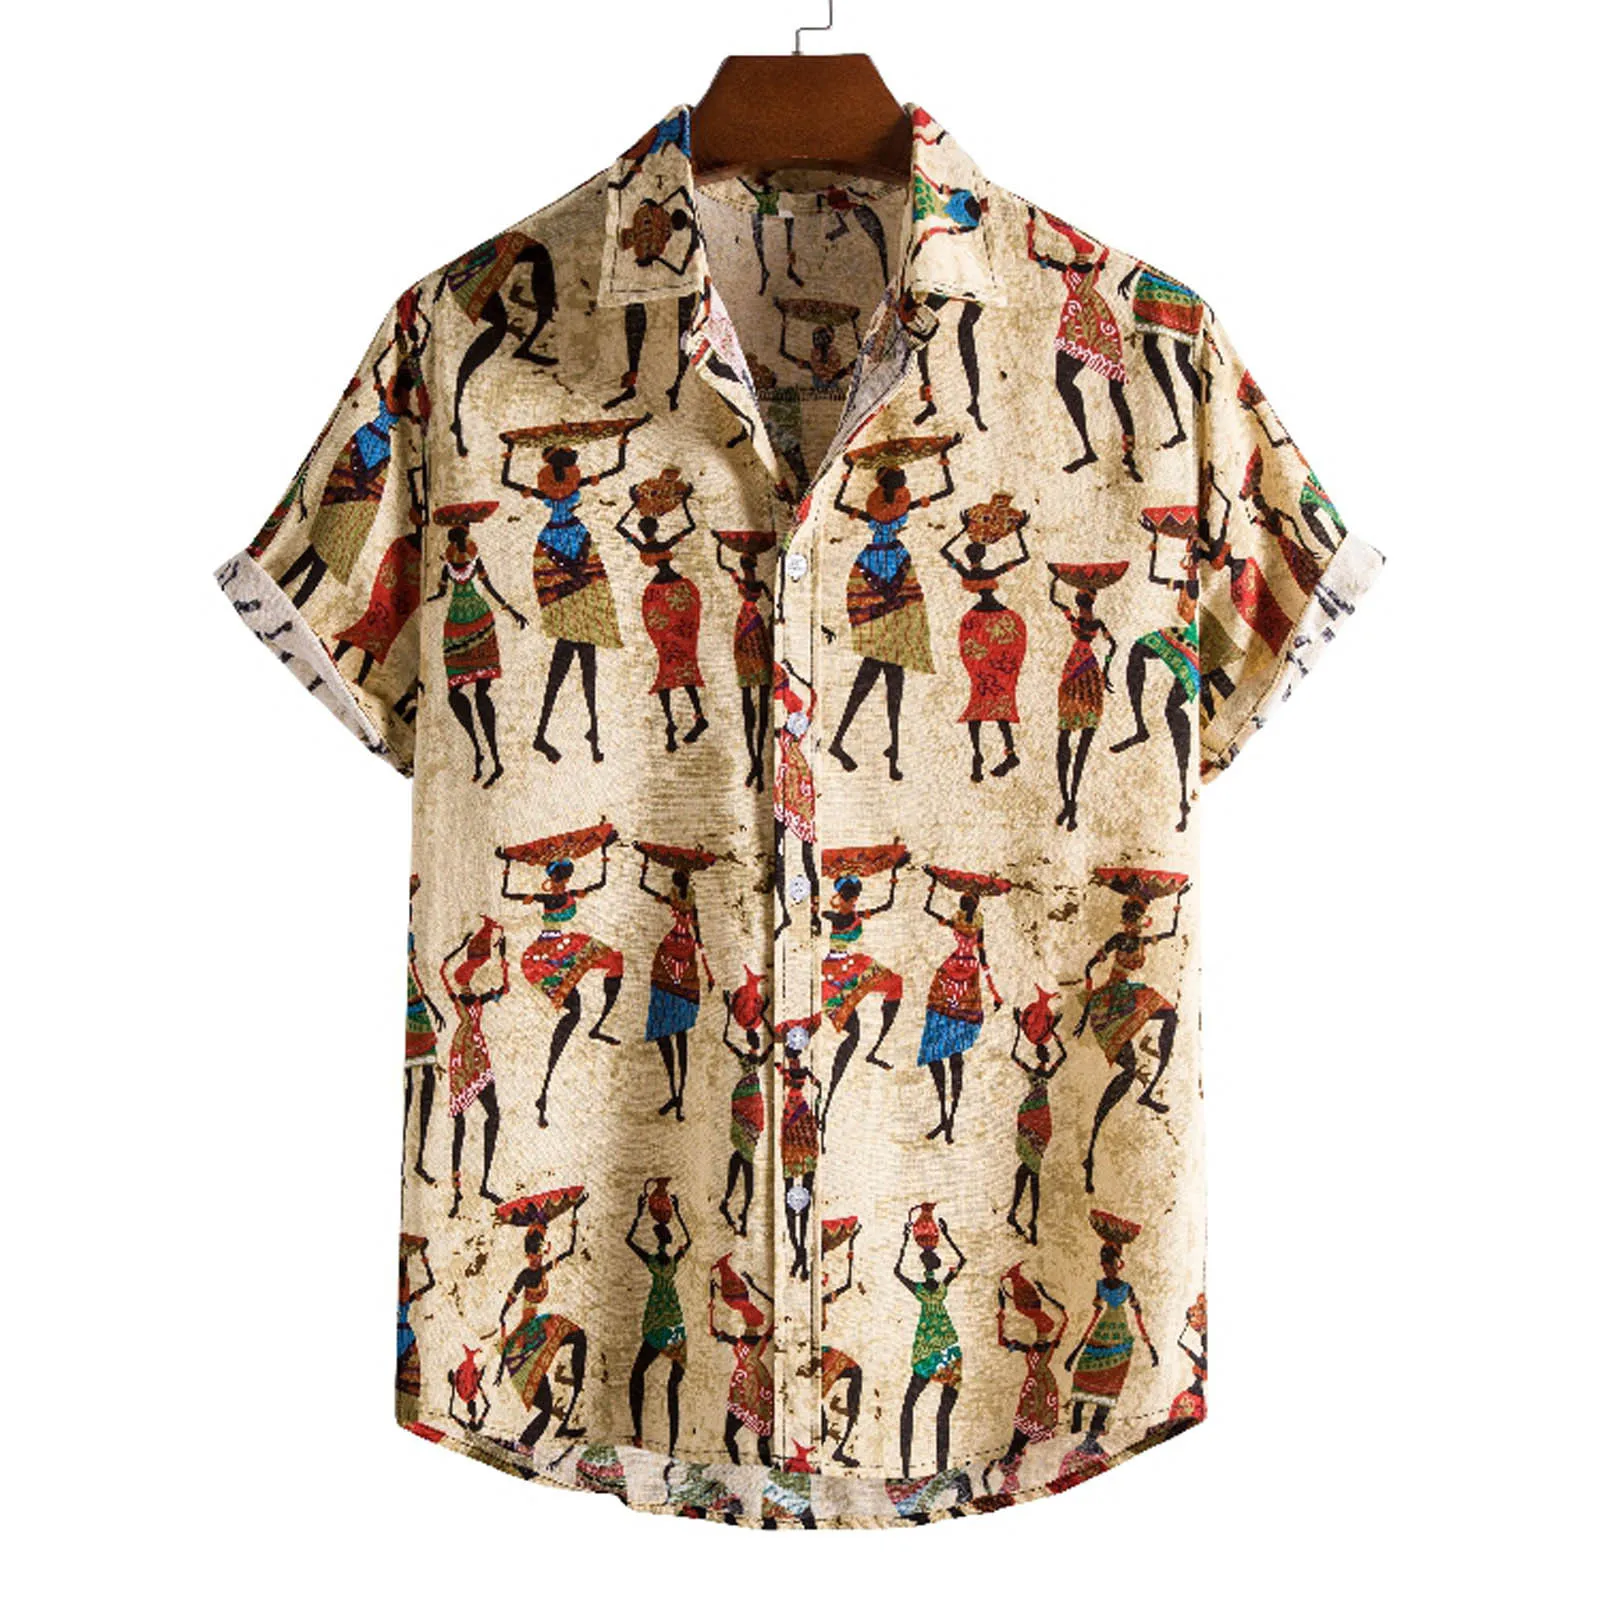 

55# Chemise De Homme 2021 Summer Casual Shirt Fashion Men Button Baggy Cotton Linen Fahion Printed Short Sleeve Tops Blouse